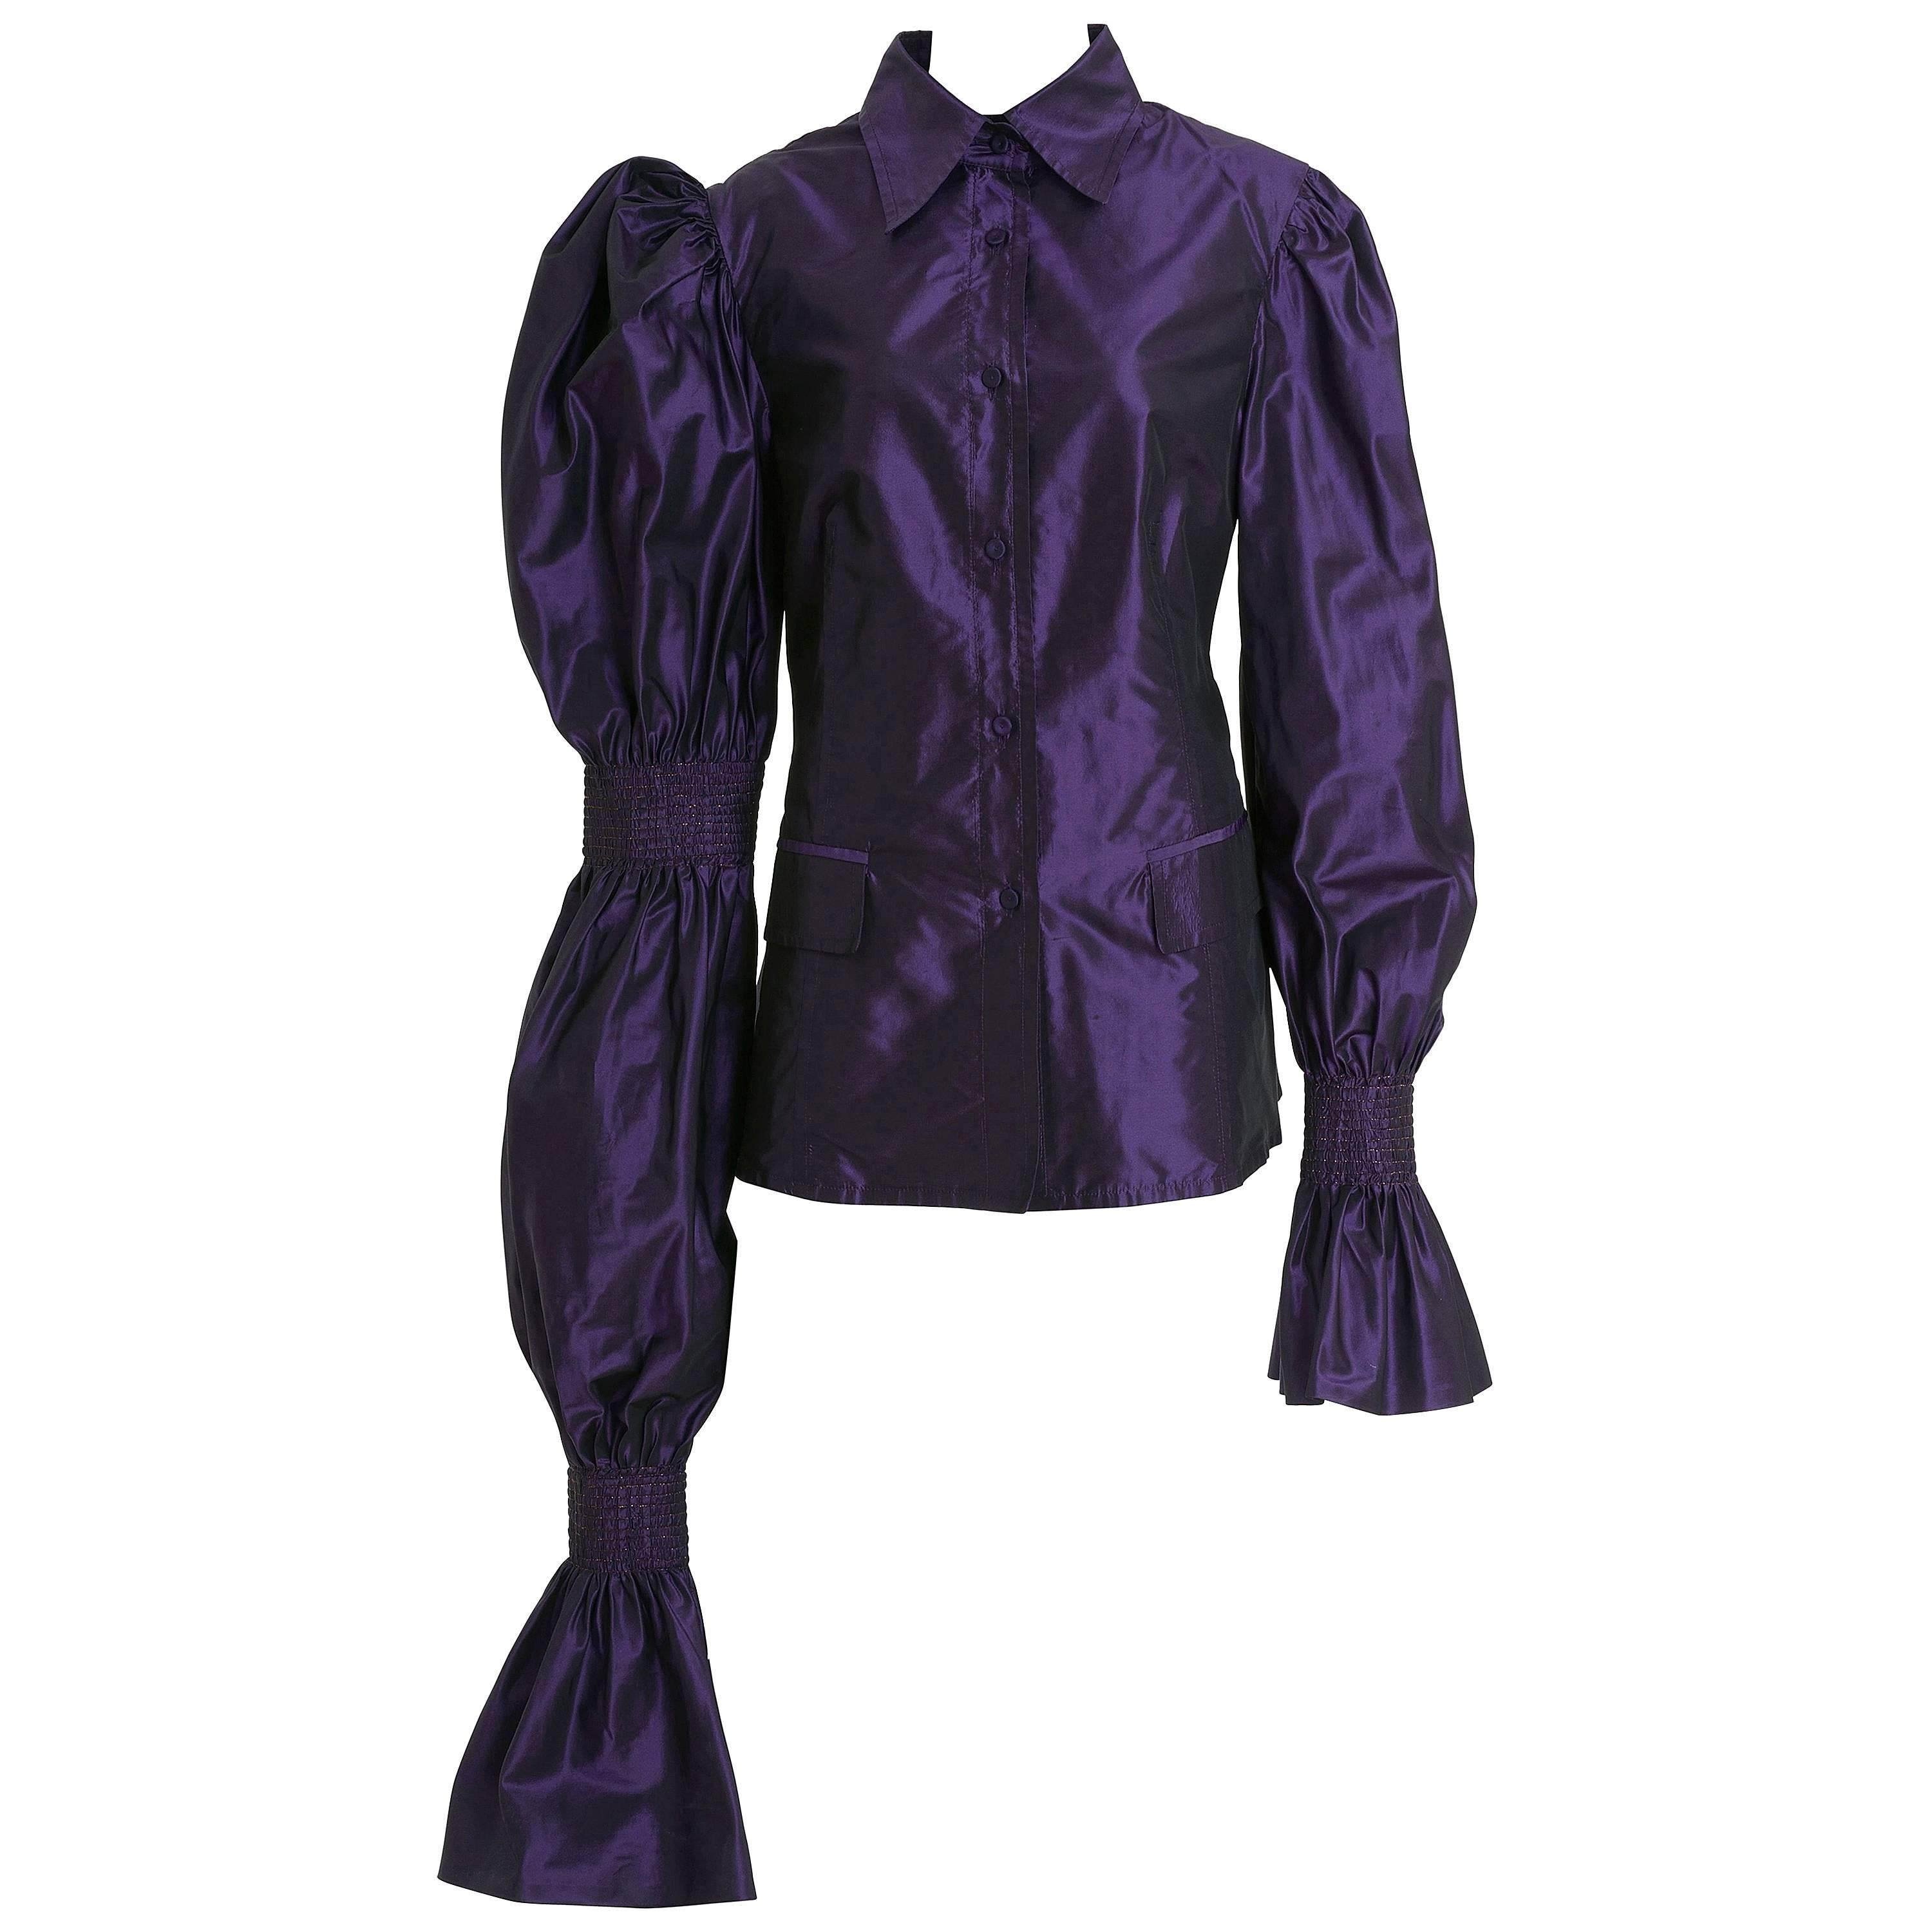 1990s GIANFRANCO FERRE' Purple Taffeta Blouse Jacket